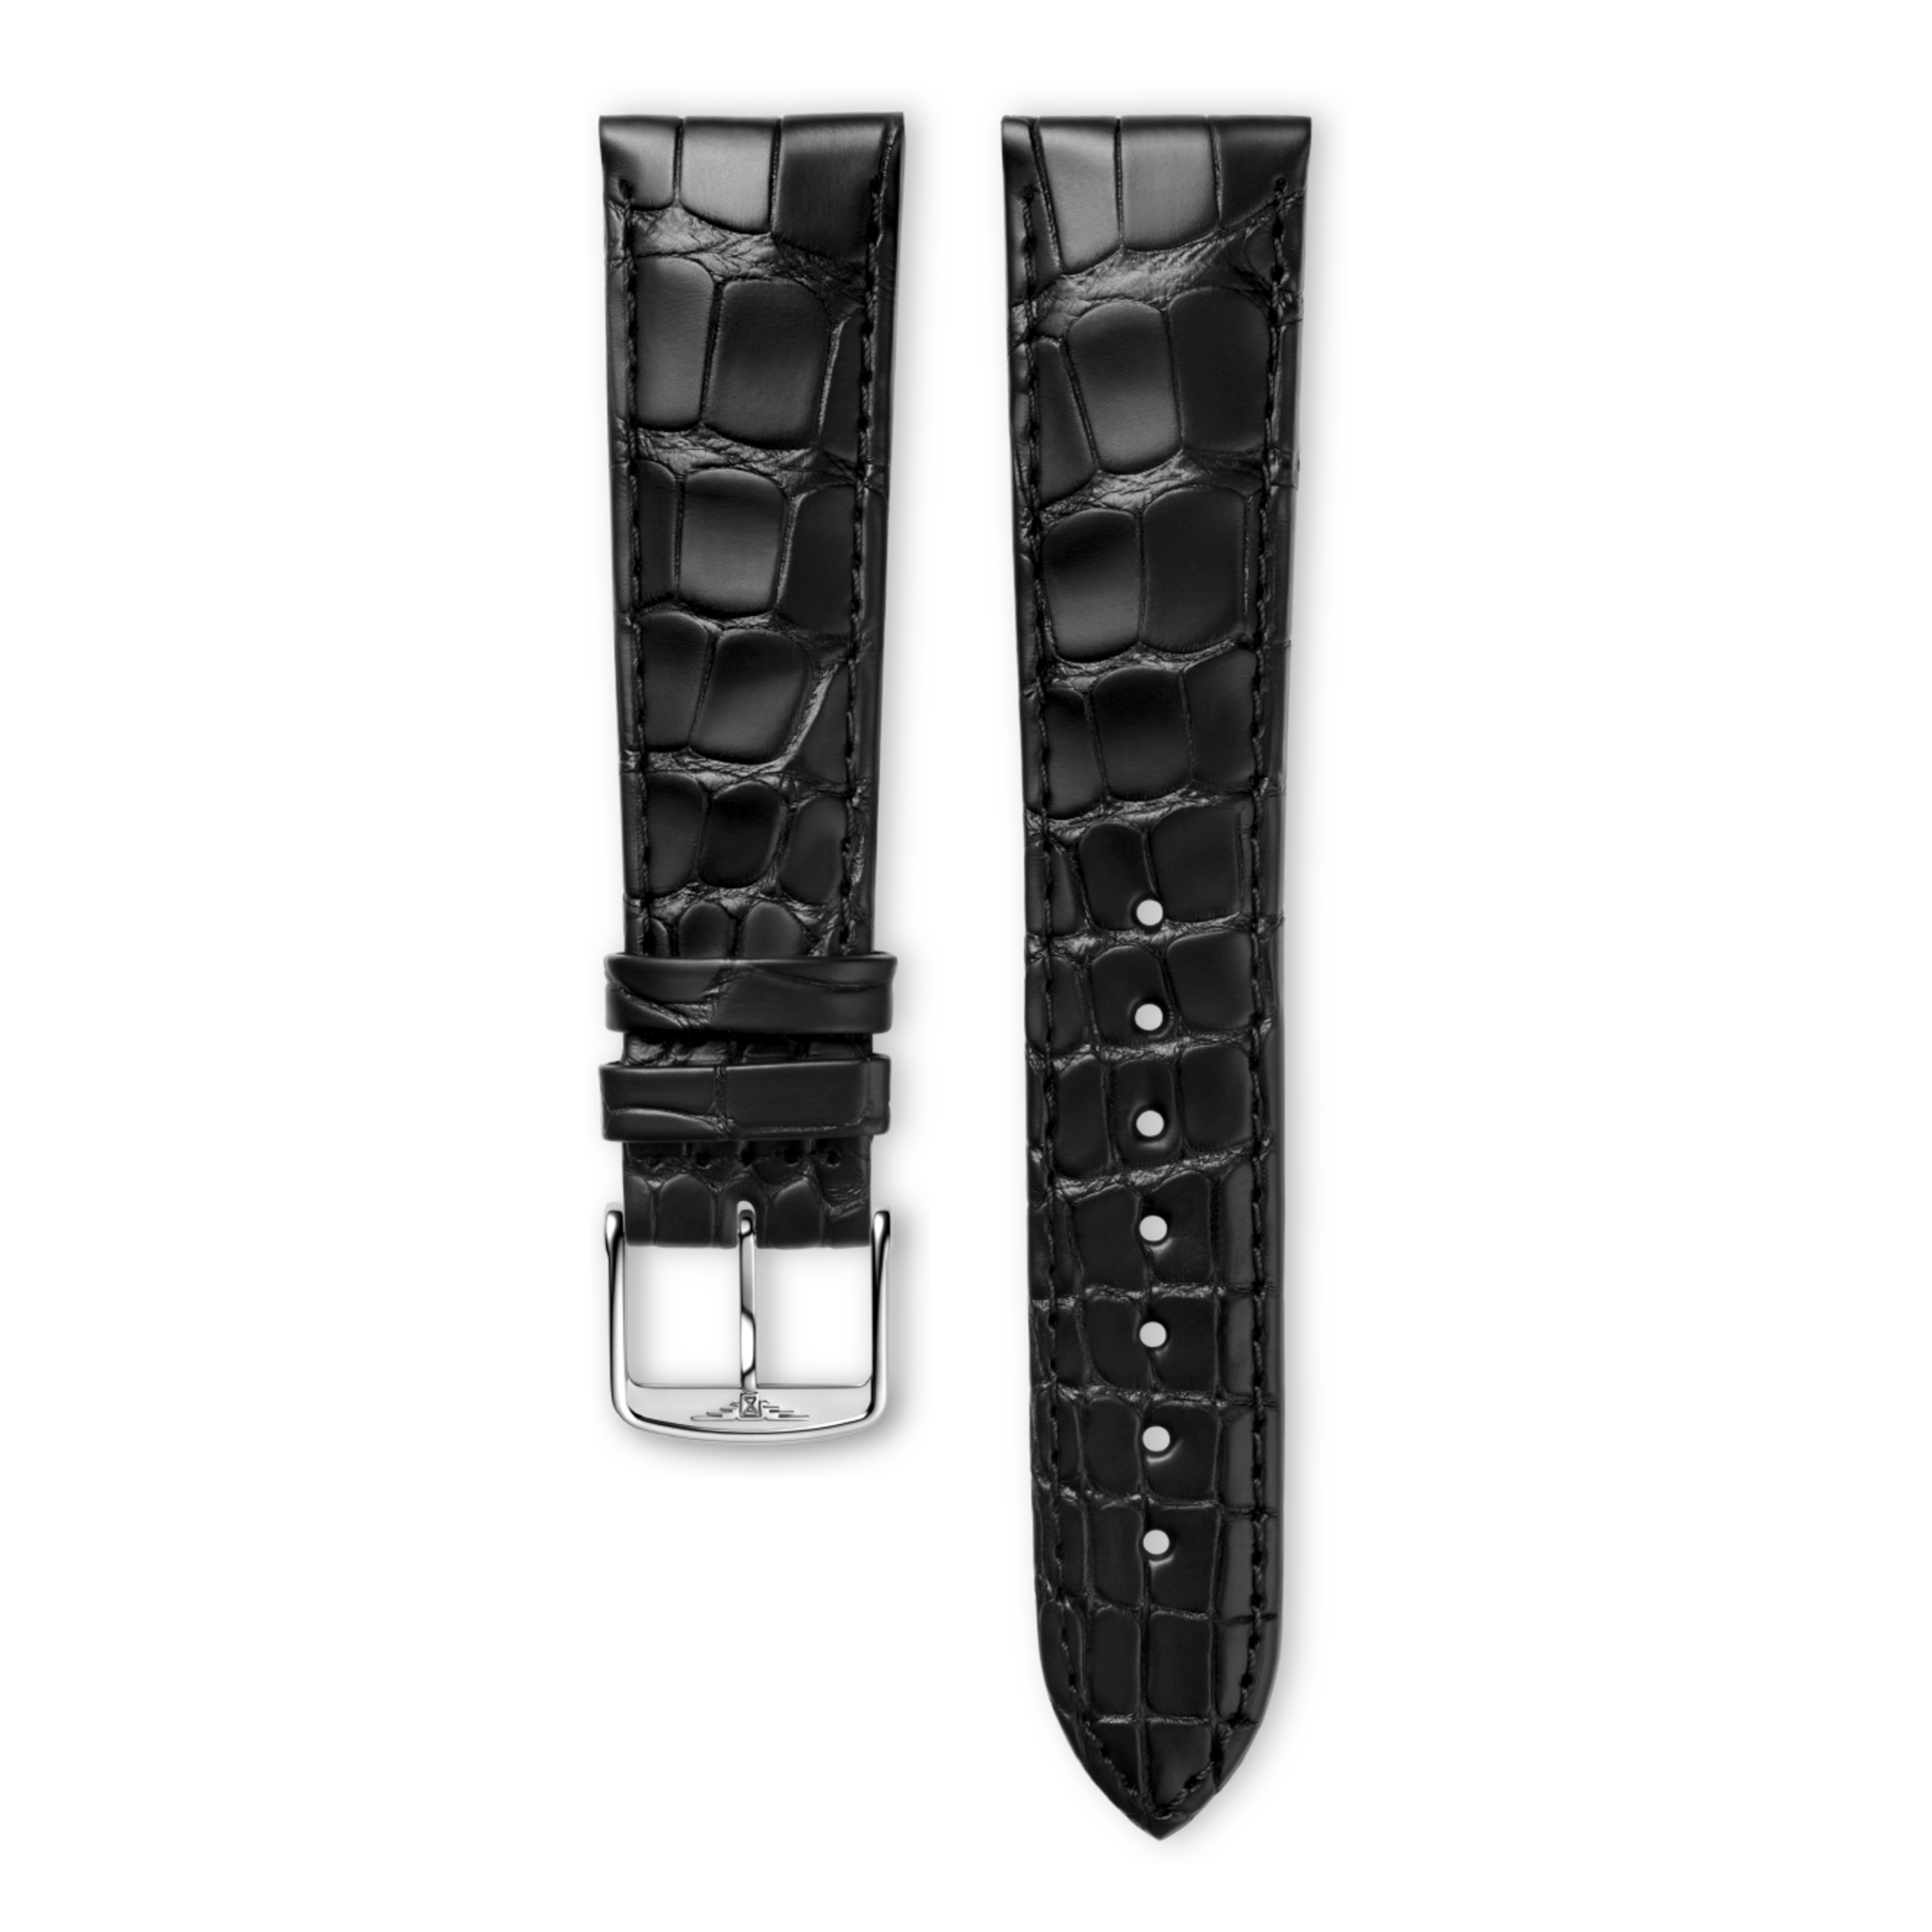 Matt black calf leather strap